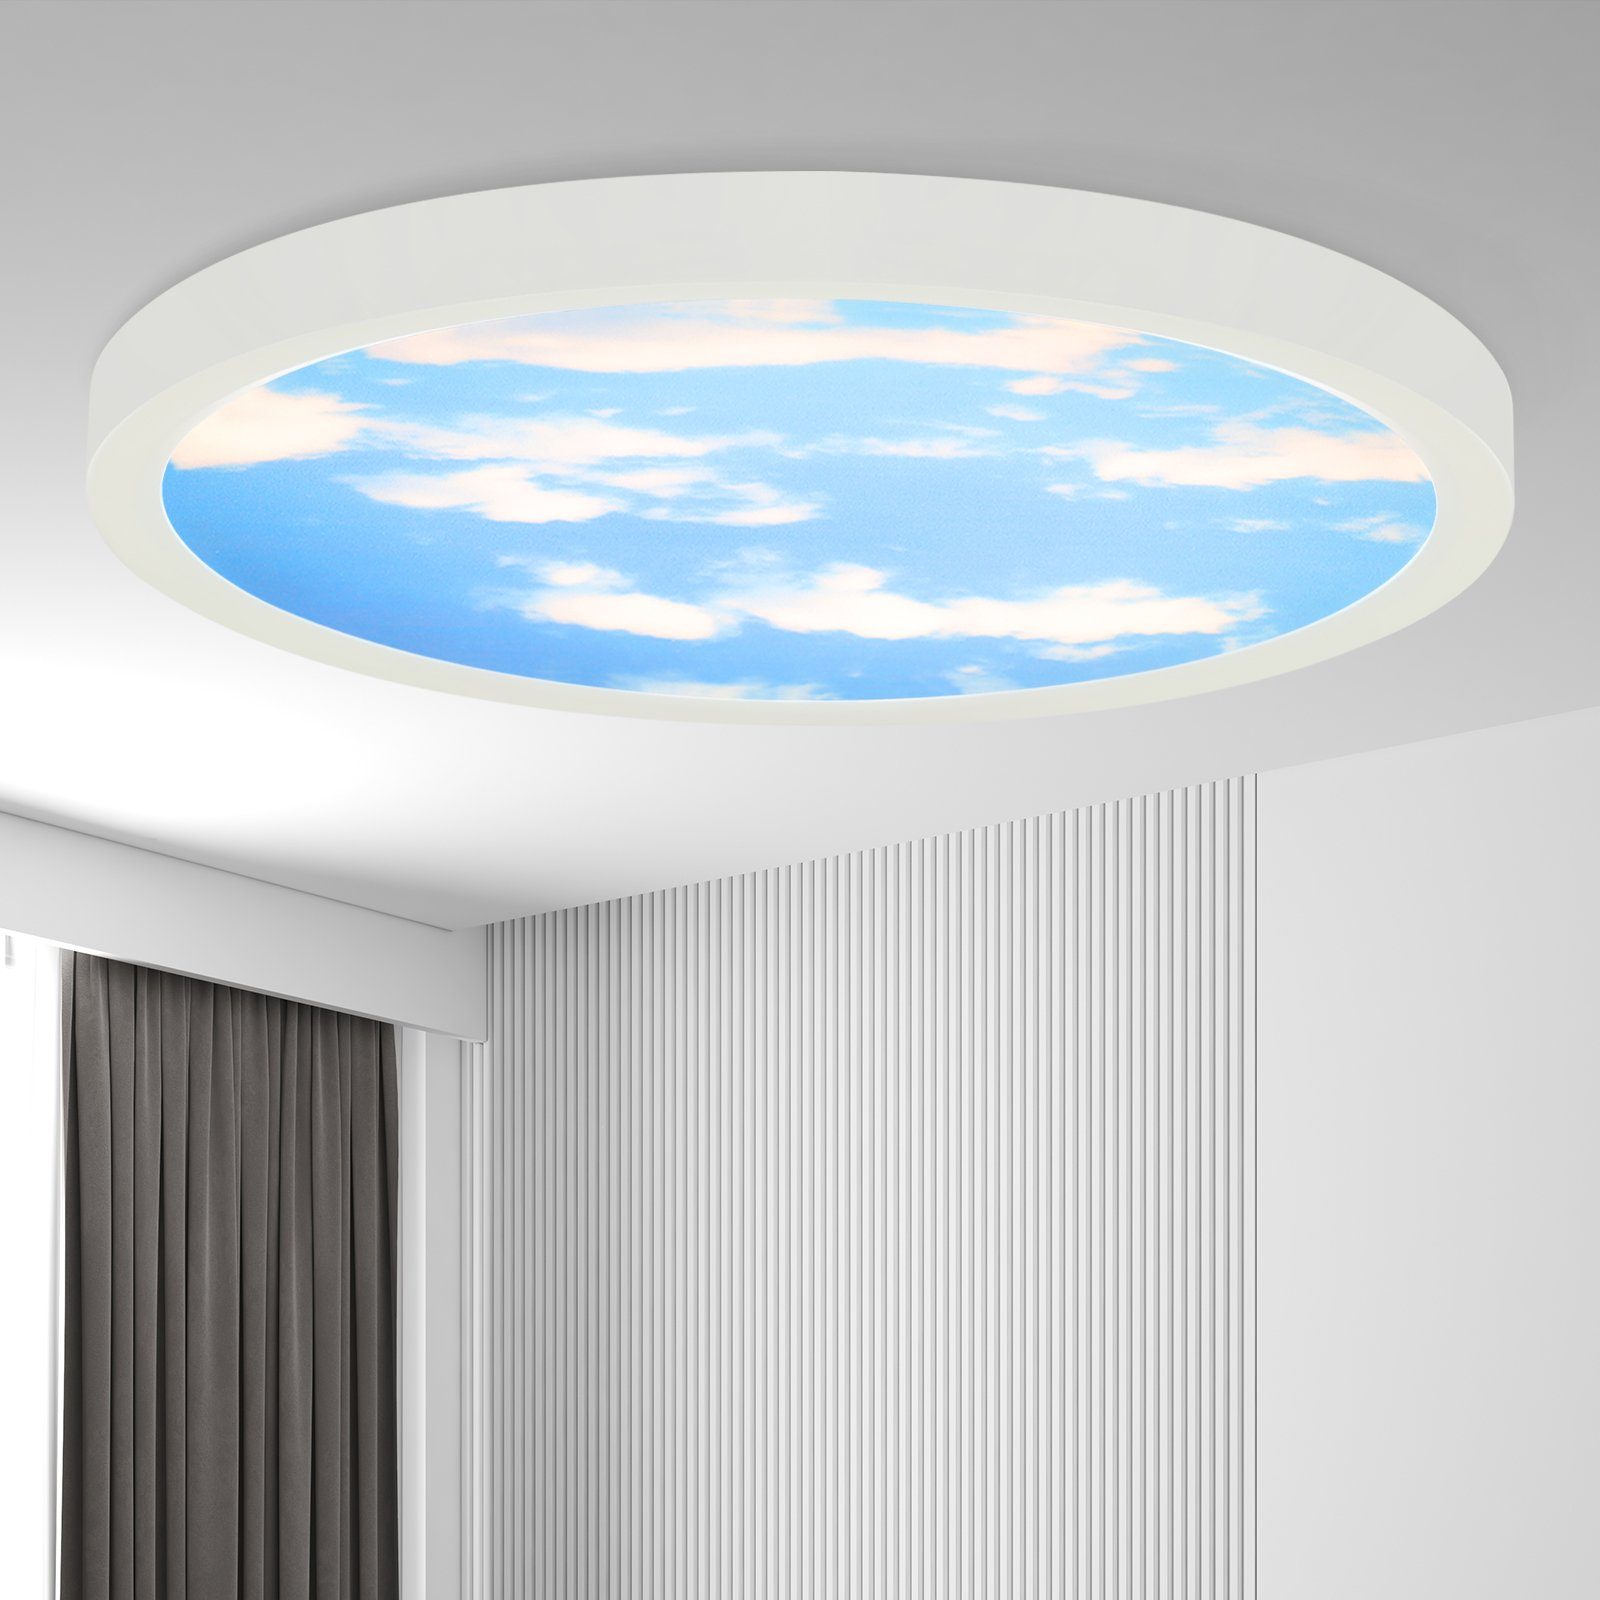 Rund Badezimmer Himmel LED 23W Neutralweiß Nicht Design, Dimmbar, fest 23cm integriert, 4000k, Bad ZMH IP44, - Deckenleuchte LED Flach